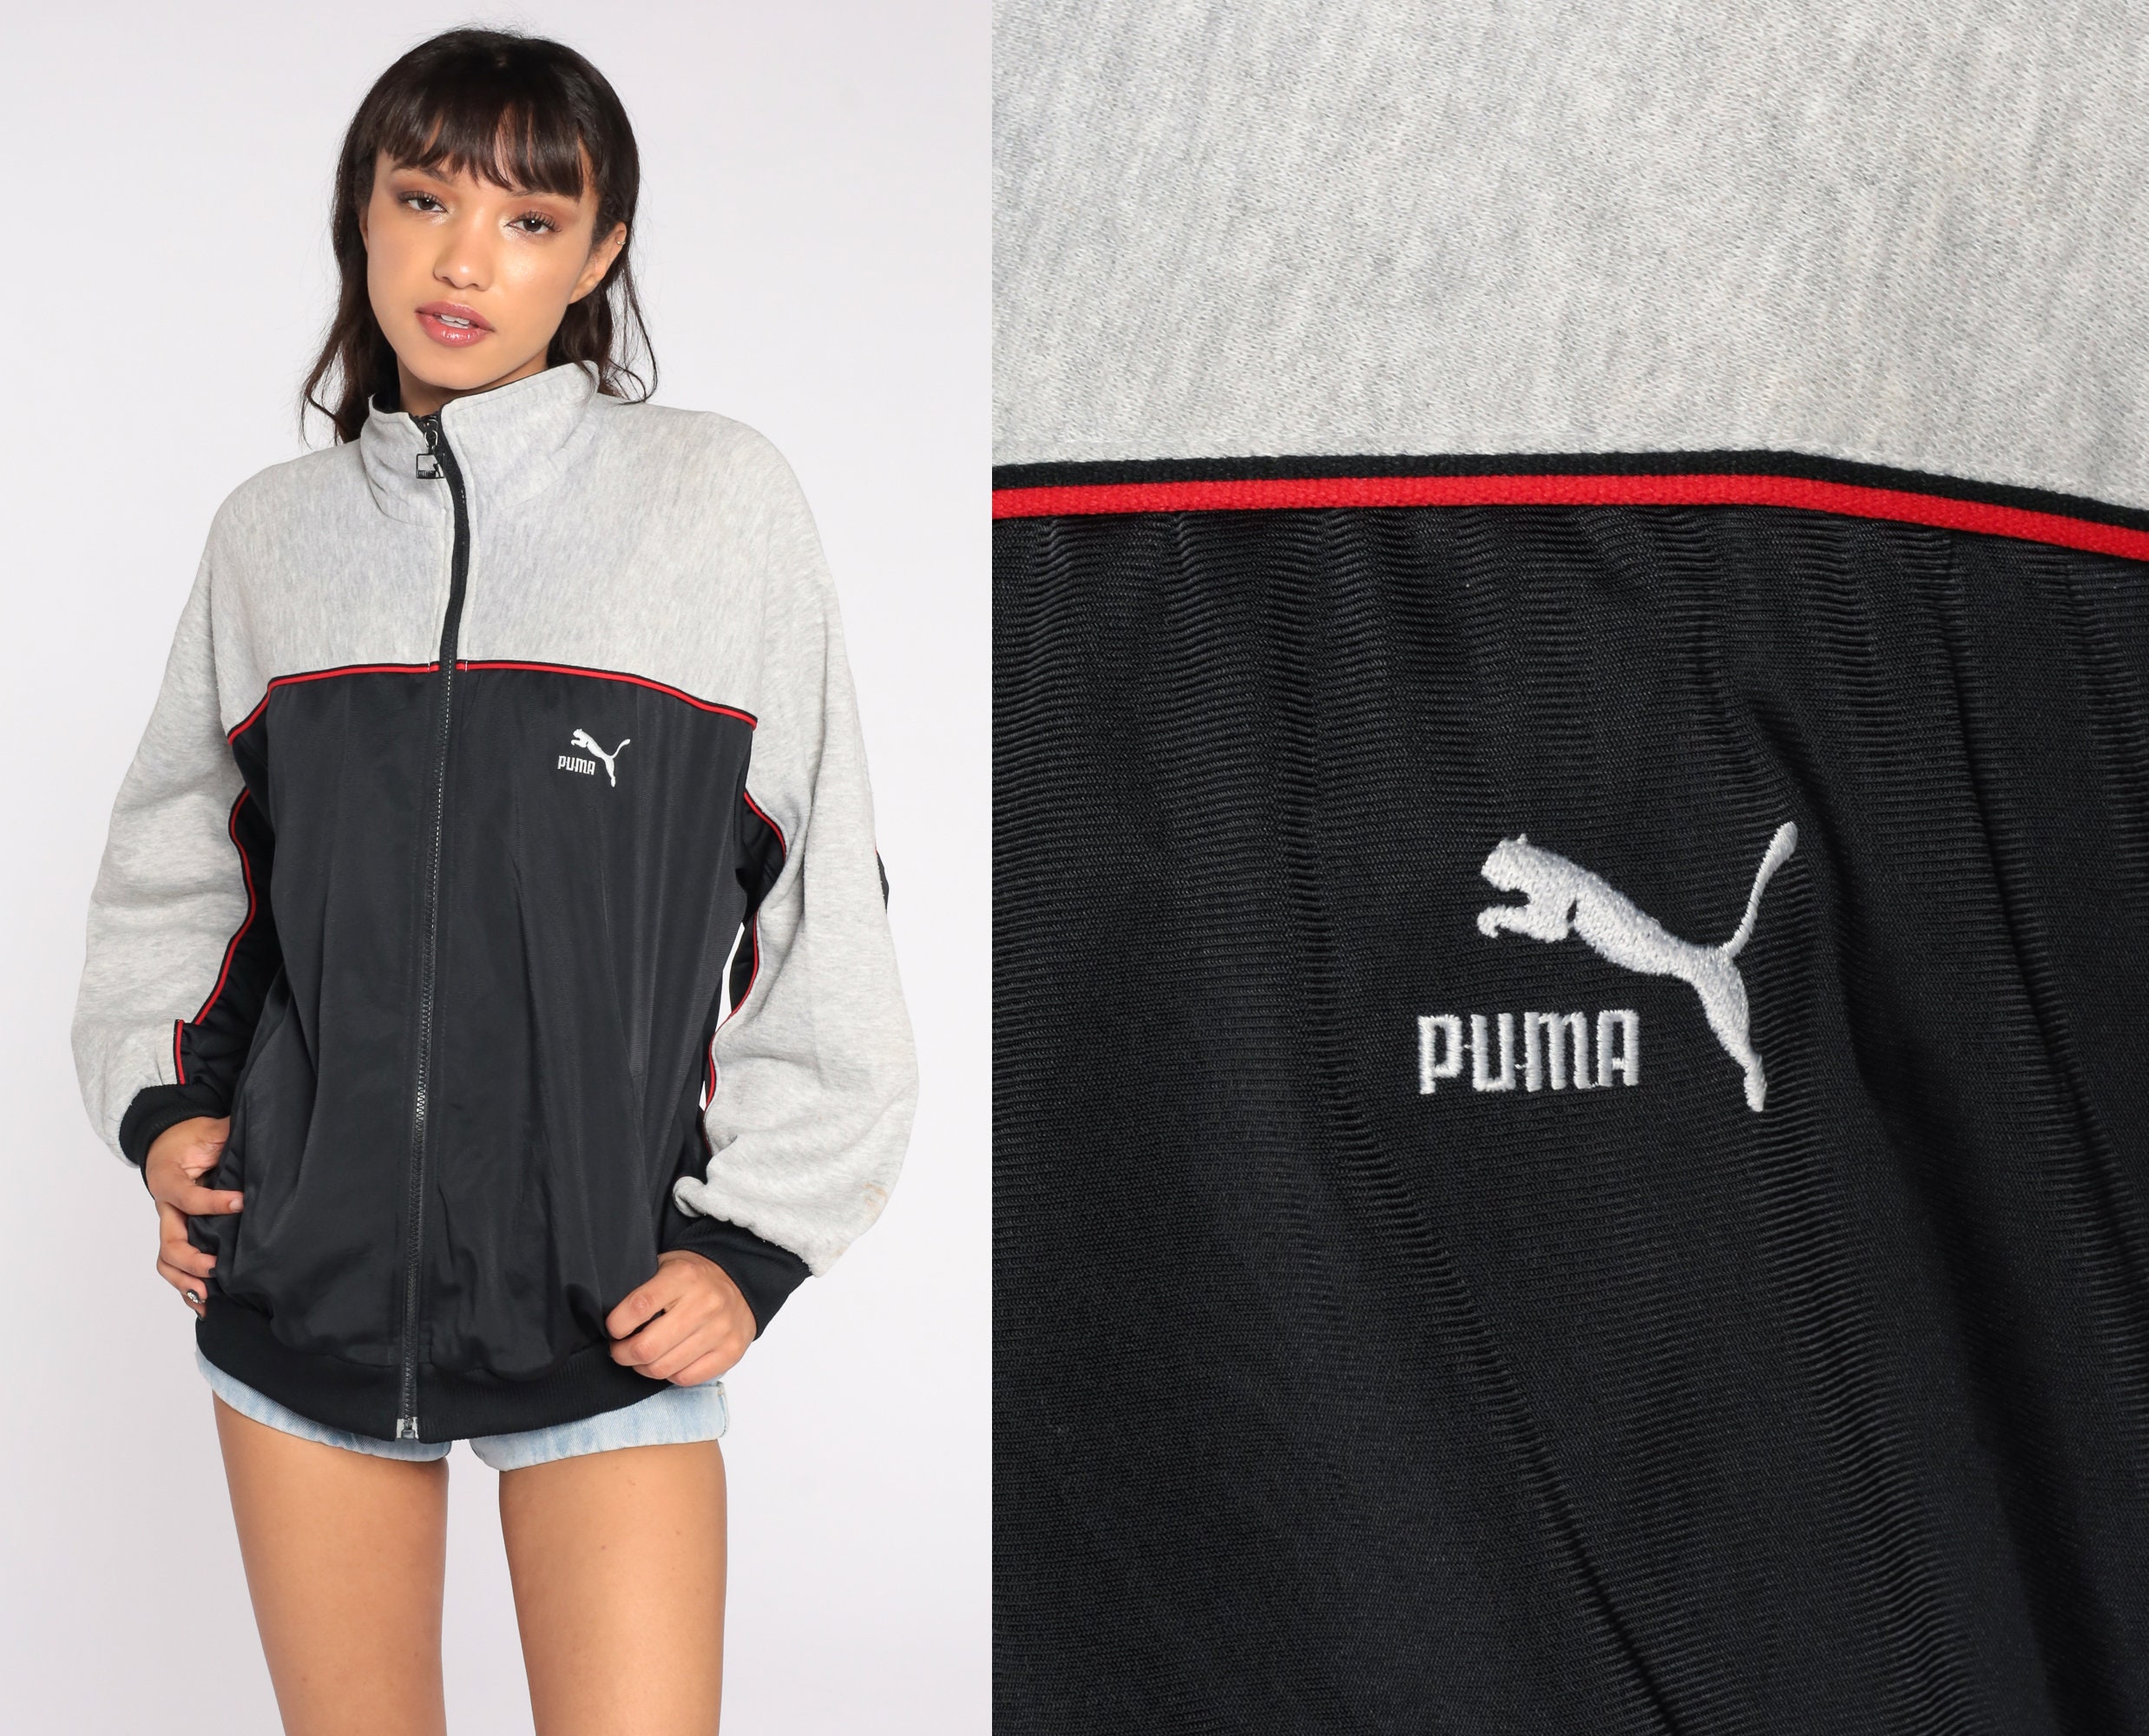 Puma XTG Track Jacket Women's Black White Active Wear Full Zip Top 